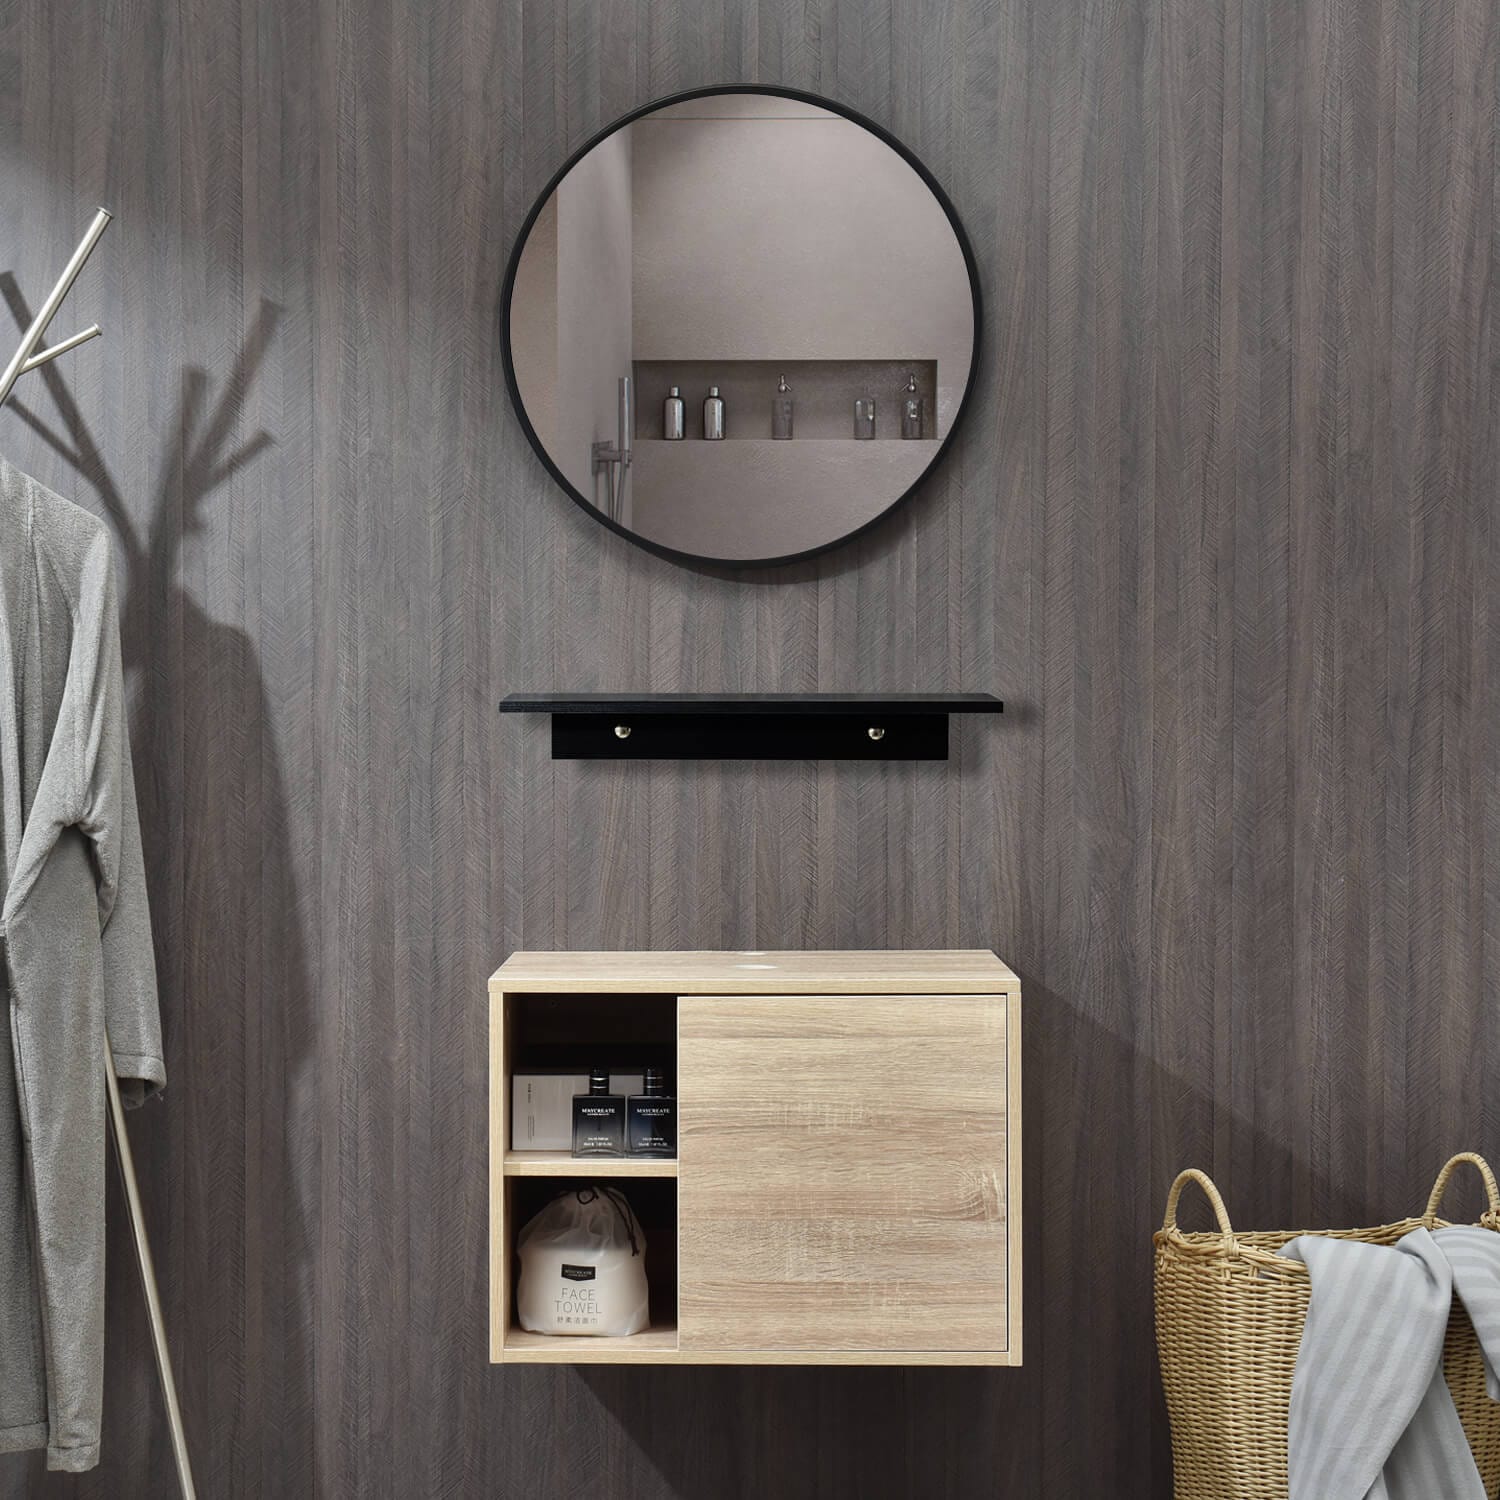 Elecwish Bathroom vanities 23.6" Modern Bathroom Vanity Cabinet With Round Mirror Wall-Mounted Side Shelf display